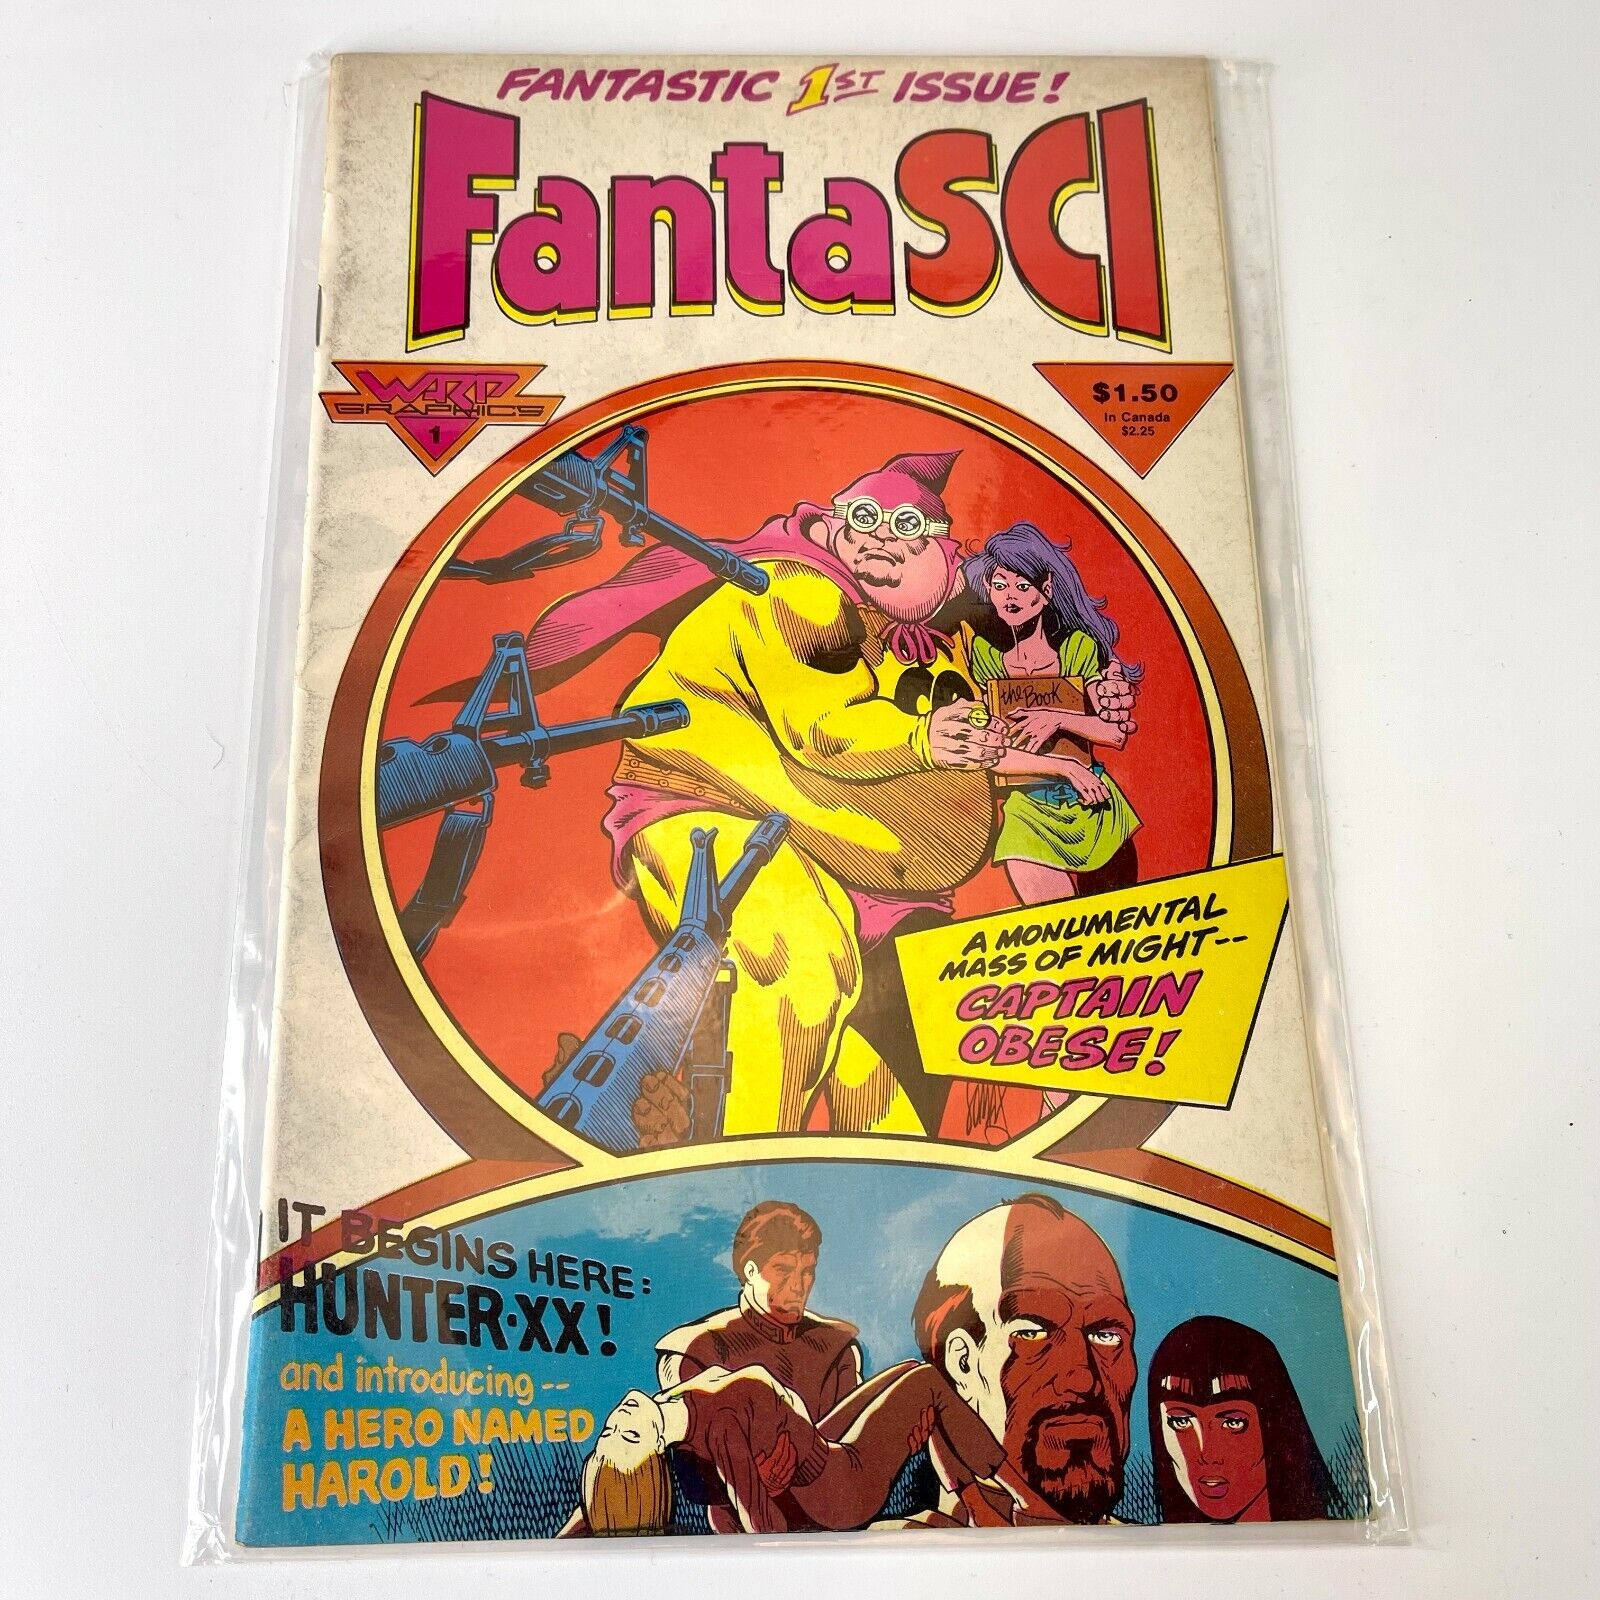 FantaSCI #1 - Captain Obese - Warp Graphics 1986